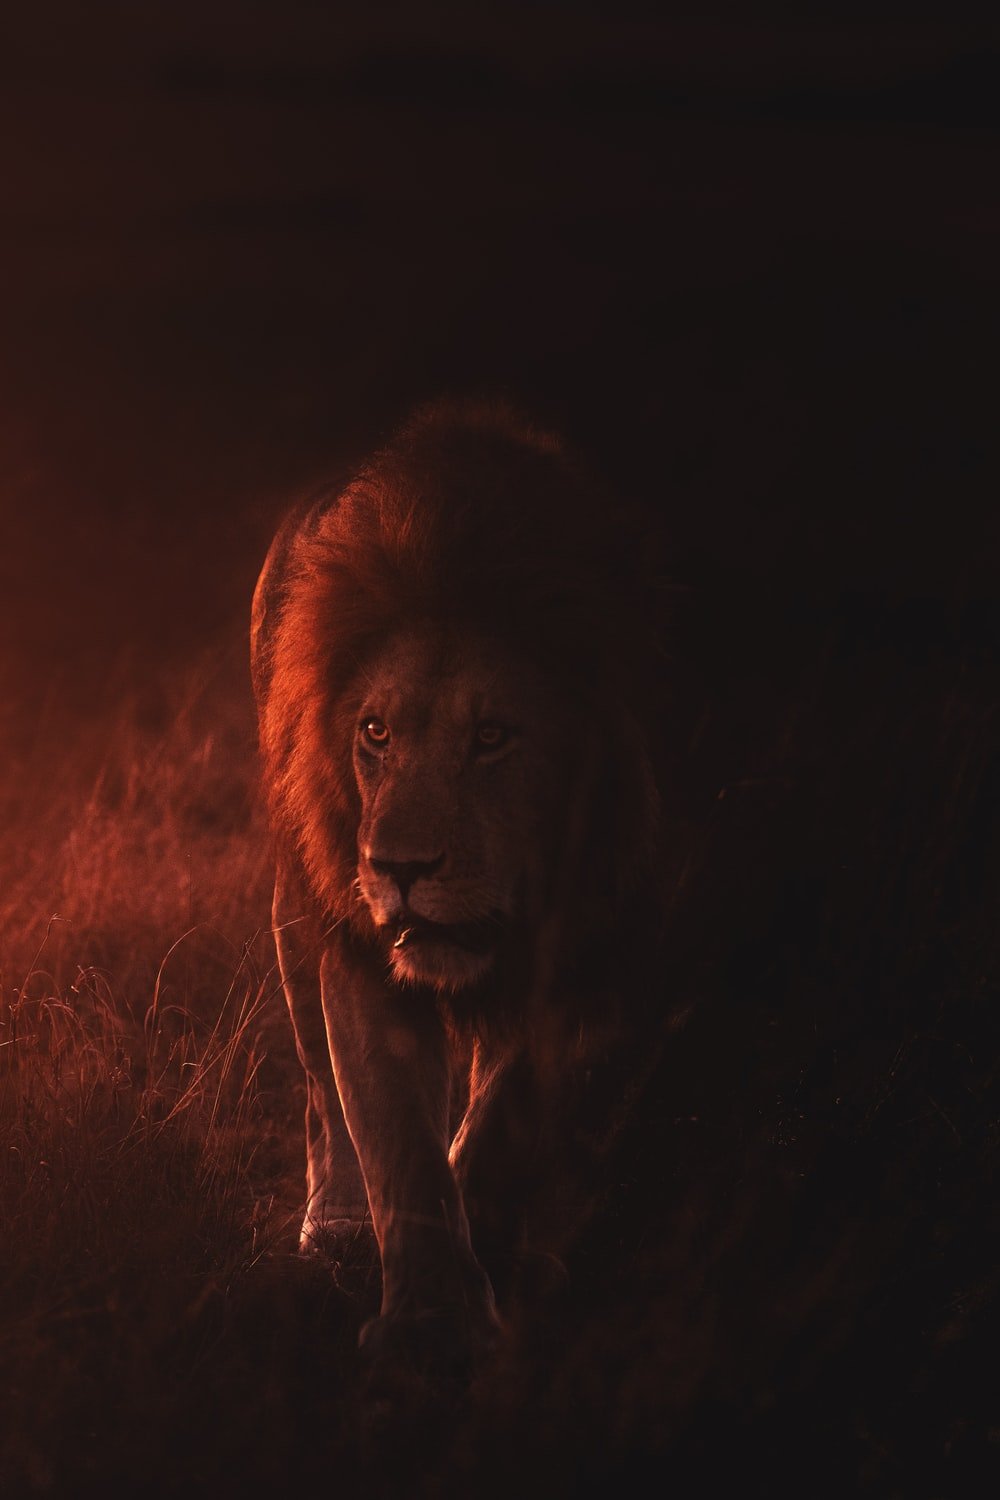 Lion Roar Picture. Download Free Image